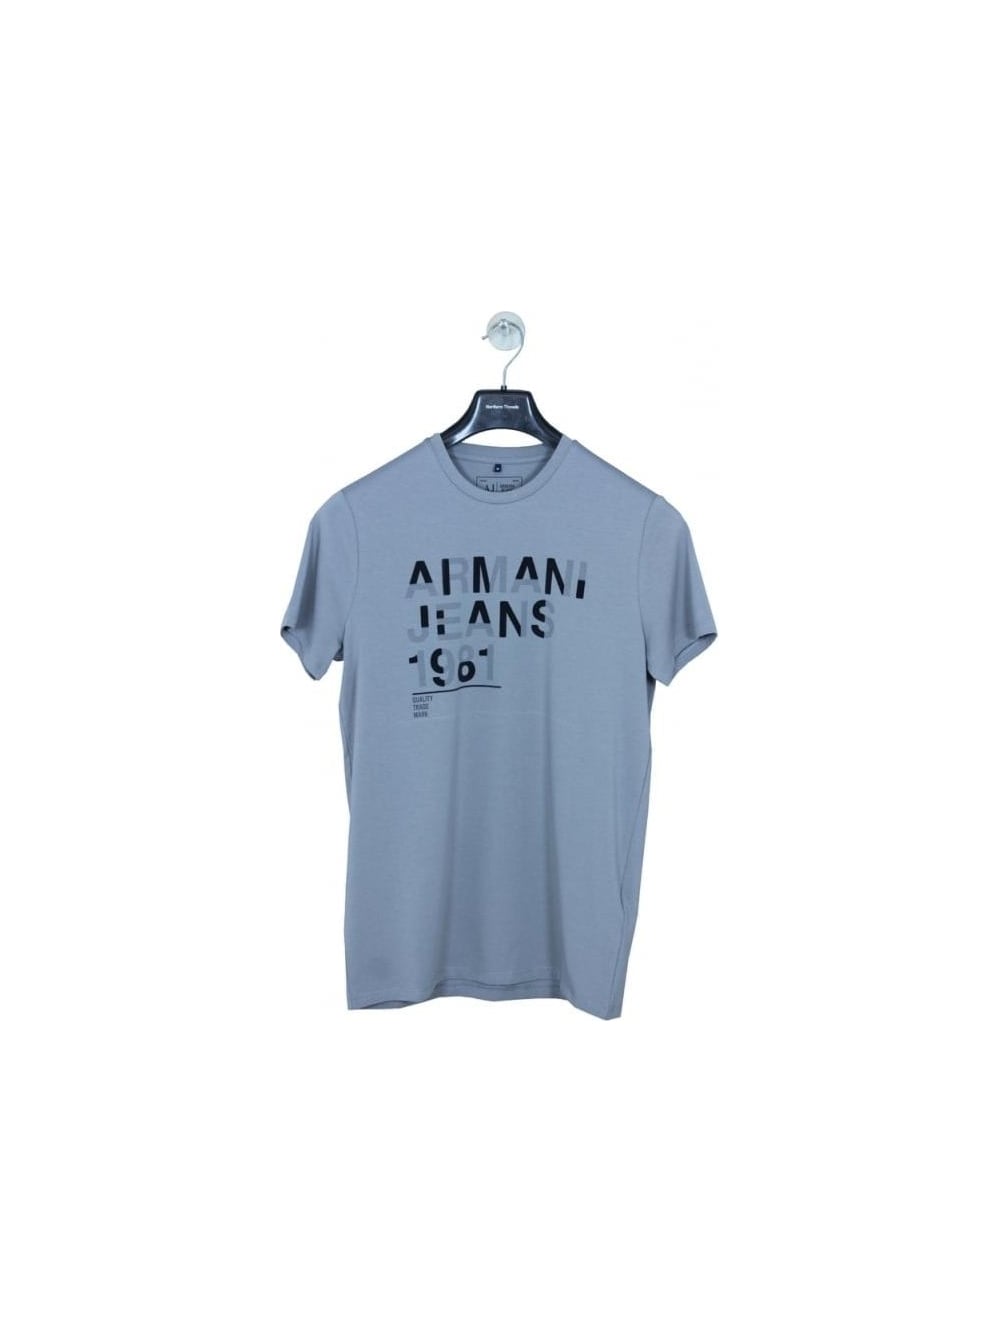 Flock Logo - Armani Jeans Half Print Flock Logo T Shirt in Grey